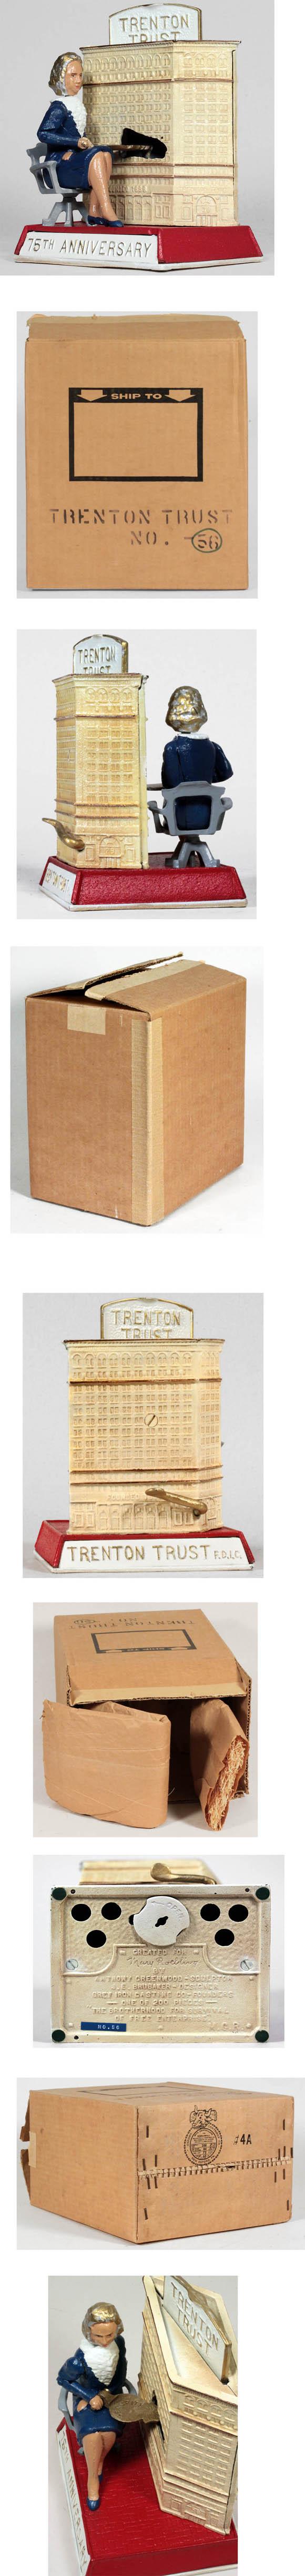 1963 Grey Iron Co., Trenton Trust Mechanical Bank in Original Box